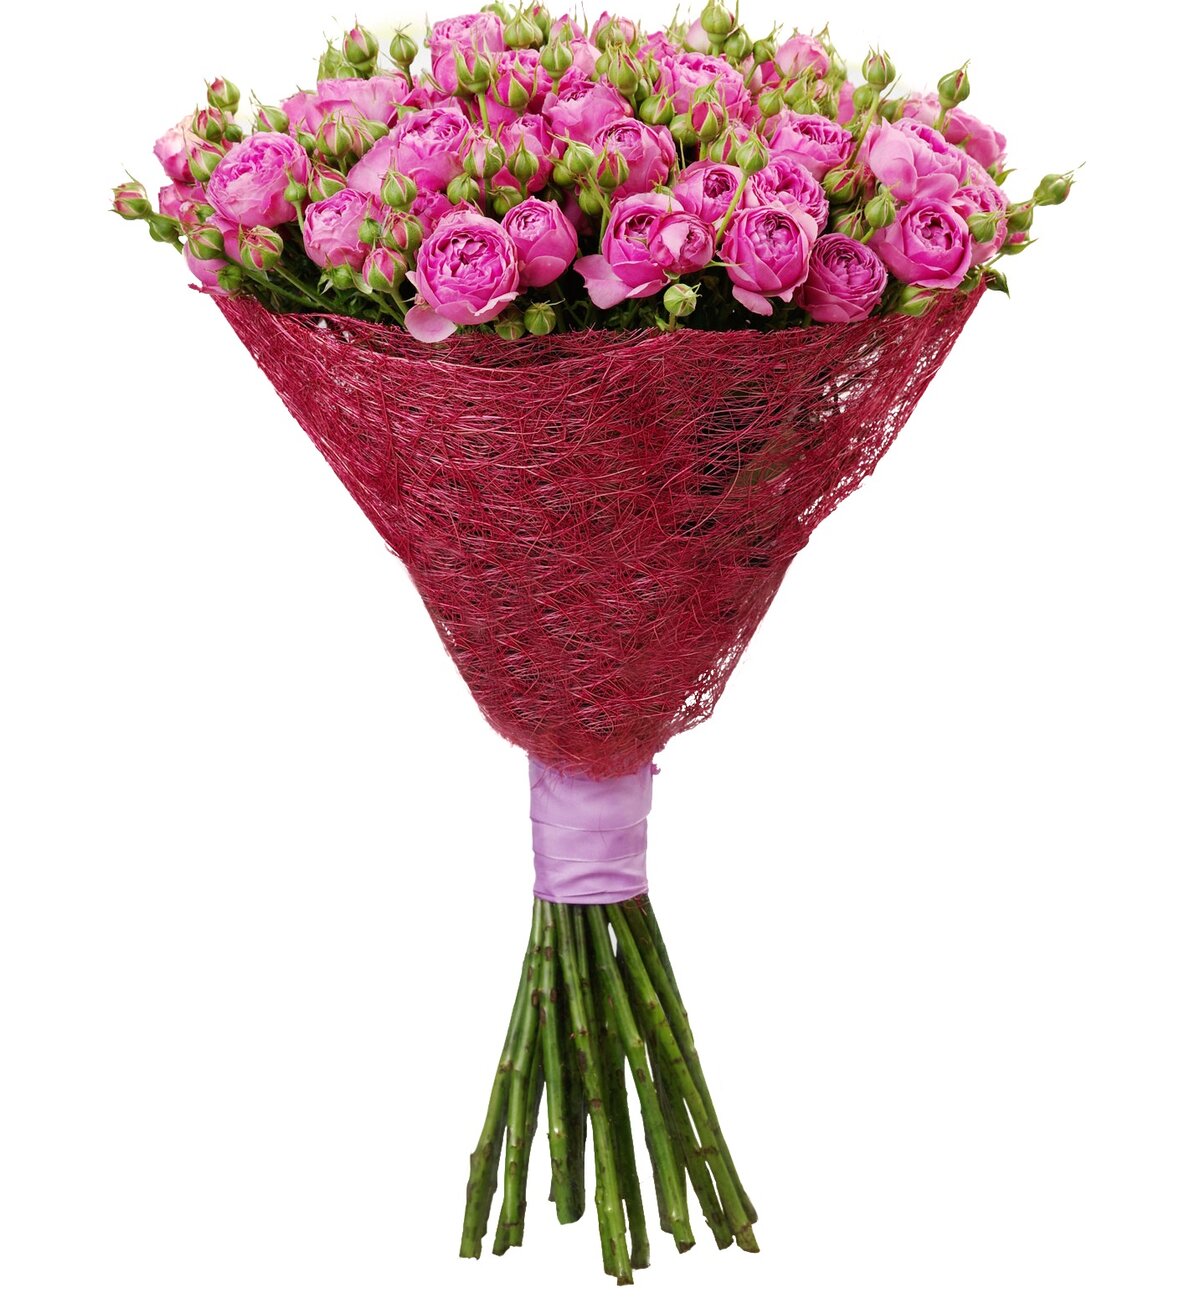 Фото цветов за дешево в подарок невесте